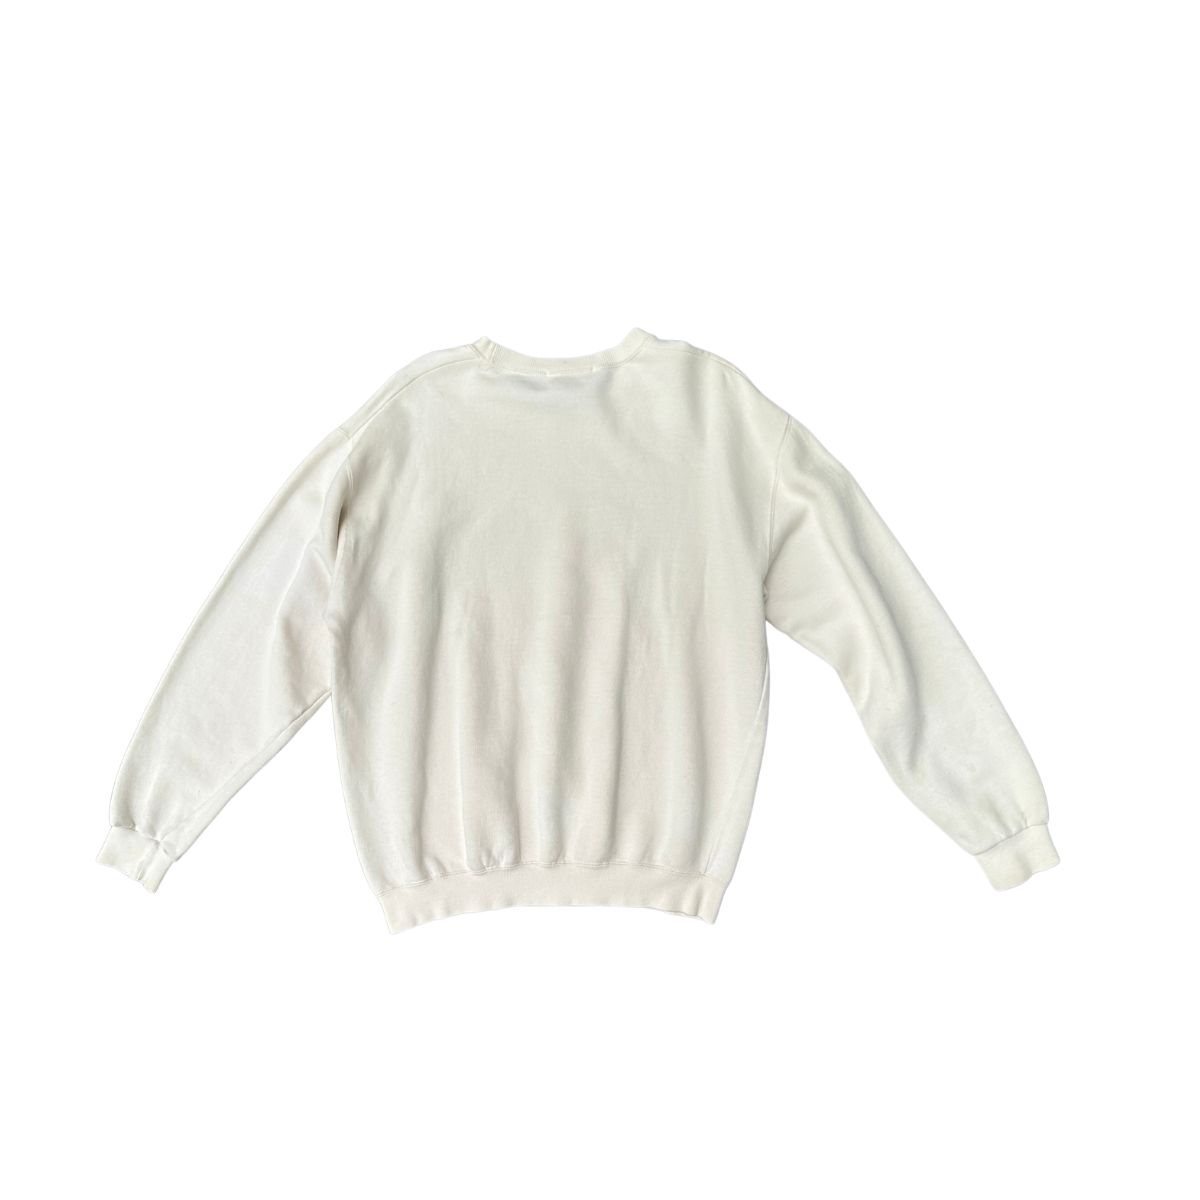 Fendi Fendi Multicolor Sweater Fabric - Clothing - Etoile Luxury Vintage